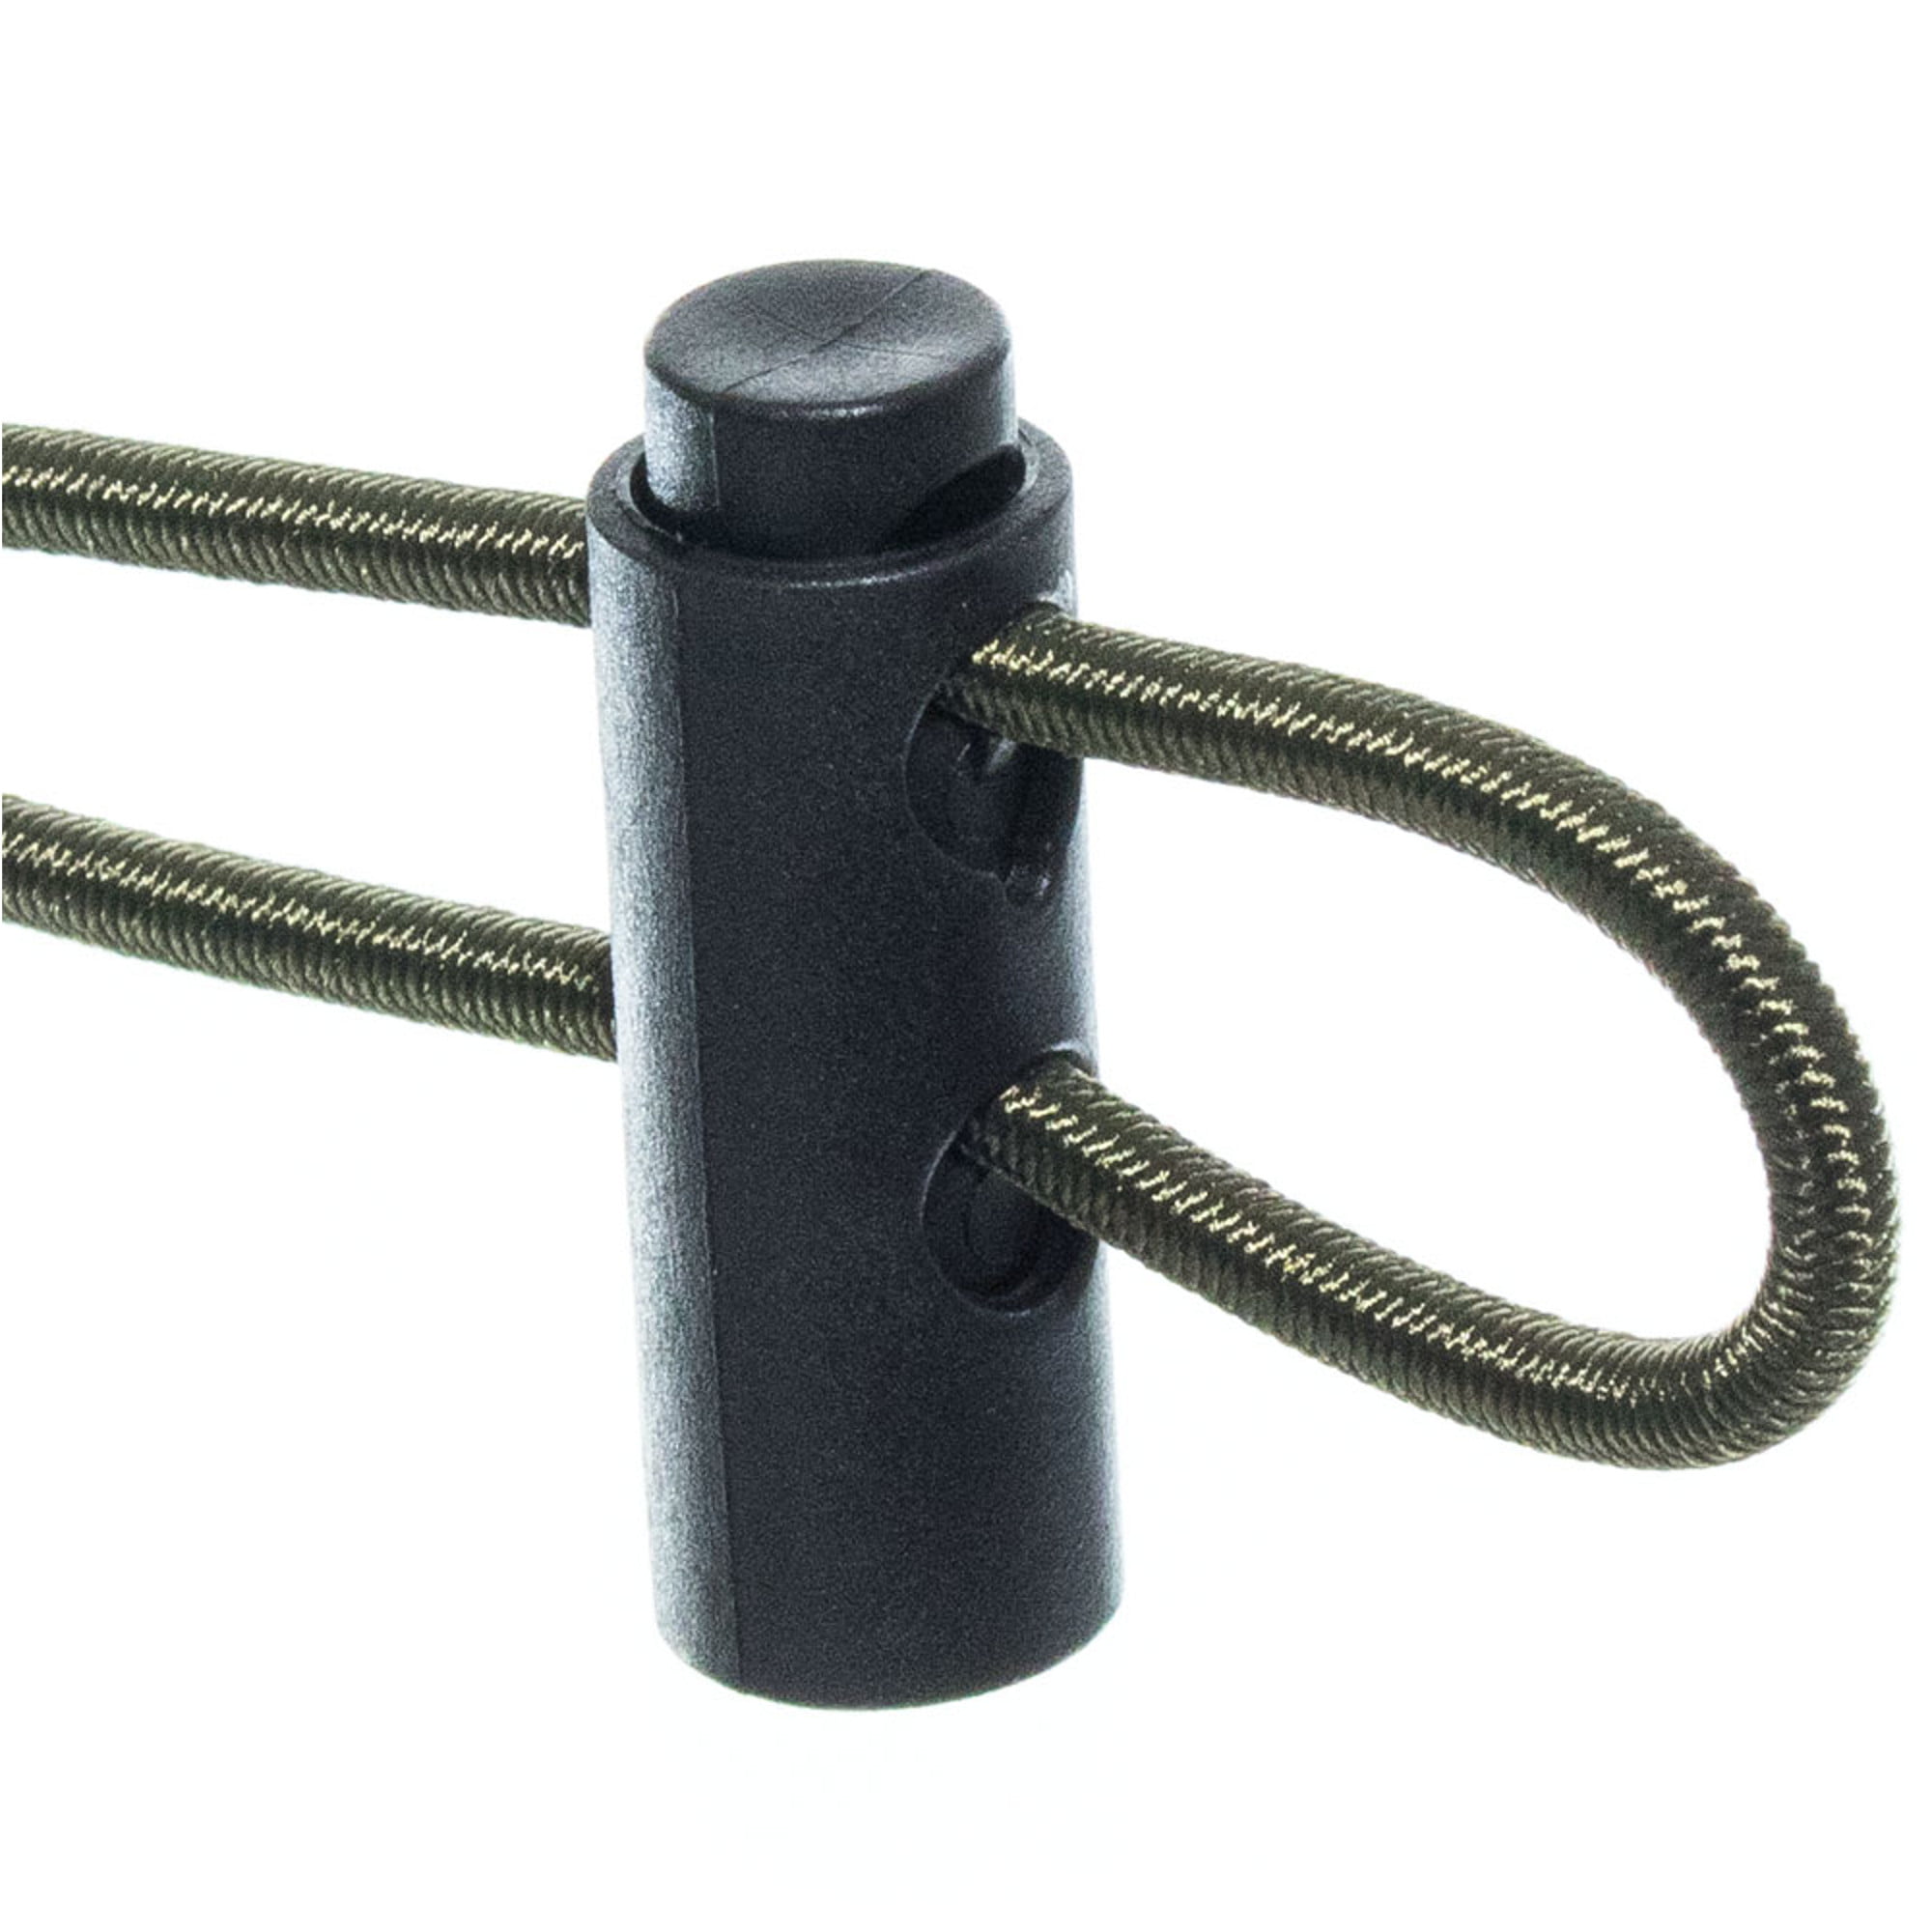 Teal Barrel Style Plastic Cord Lock